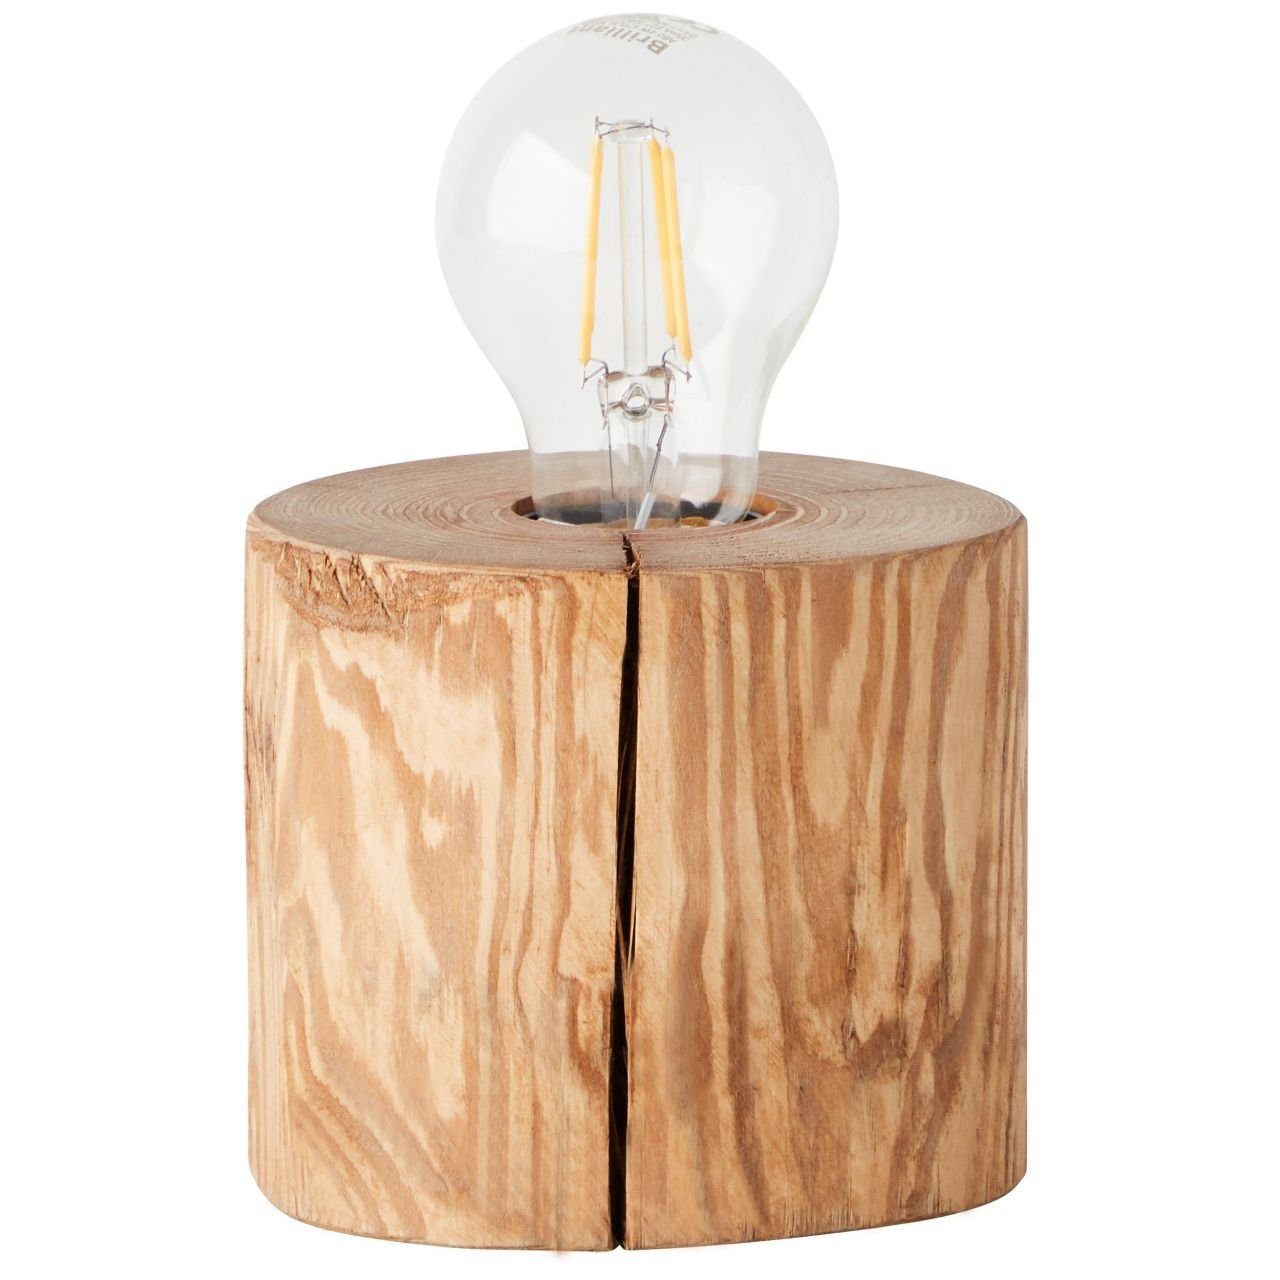 Brilliant Tischleuchte Trabo, Lampe, E27, gebeizt, Holz, 10cm A60, 1x Tischleuchte Trabo 25W kiefer